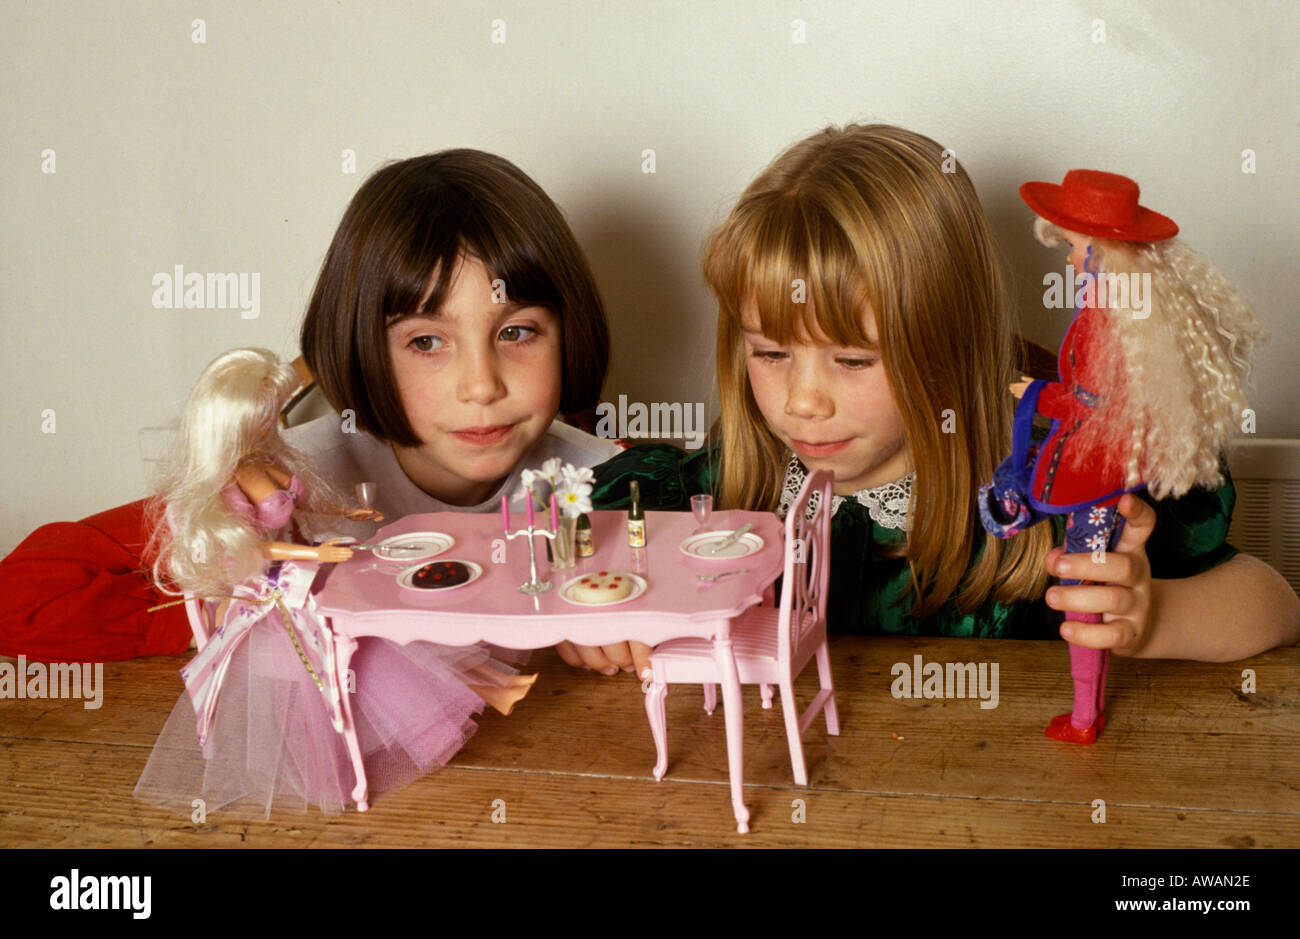 girls playing with Barbie dolls Stock Photo - Alamy